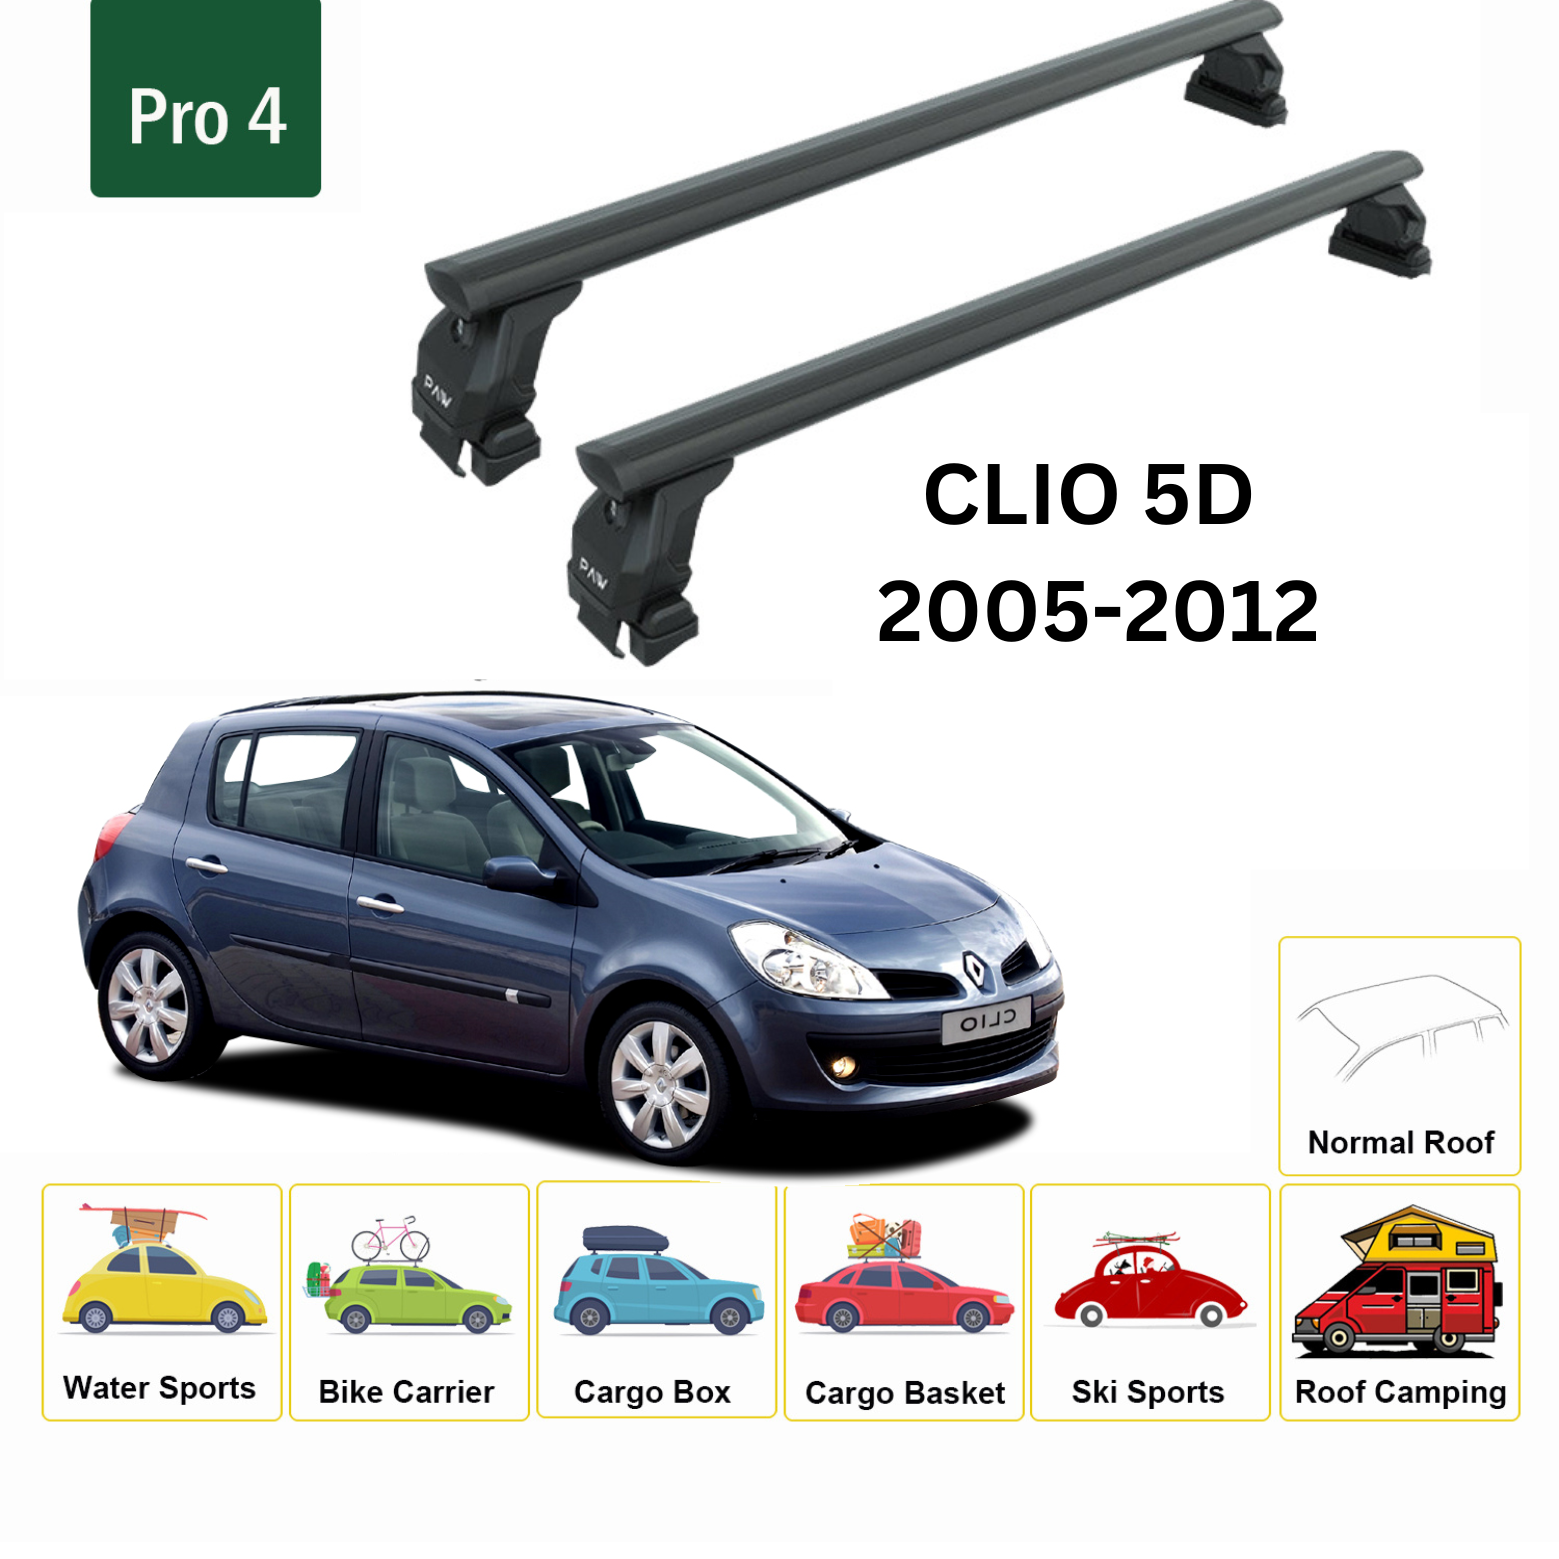 For Renault Clio 2005-2012 Roof Rack System, Aluminium Cross Bar, Metal Bracket, Normal Roof, Black